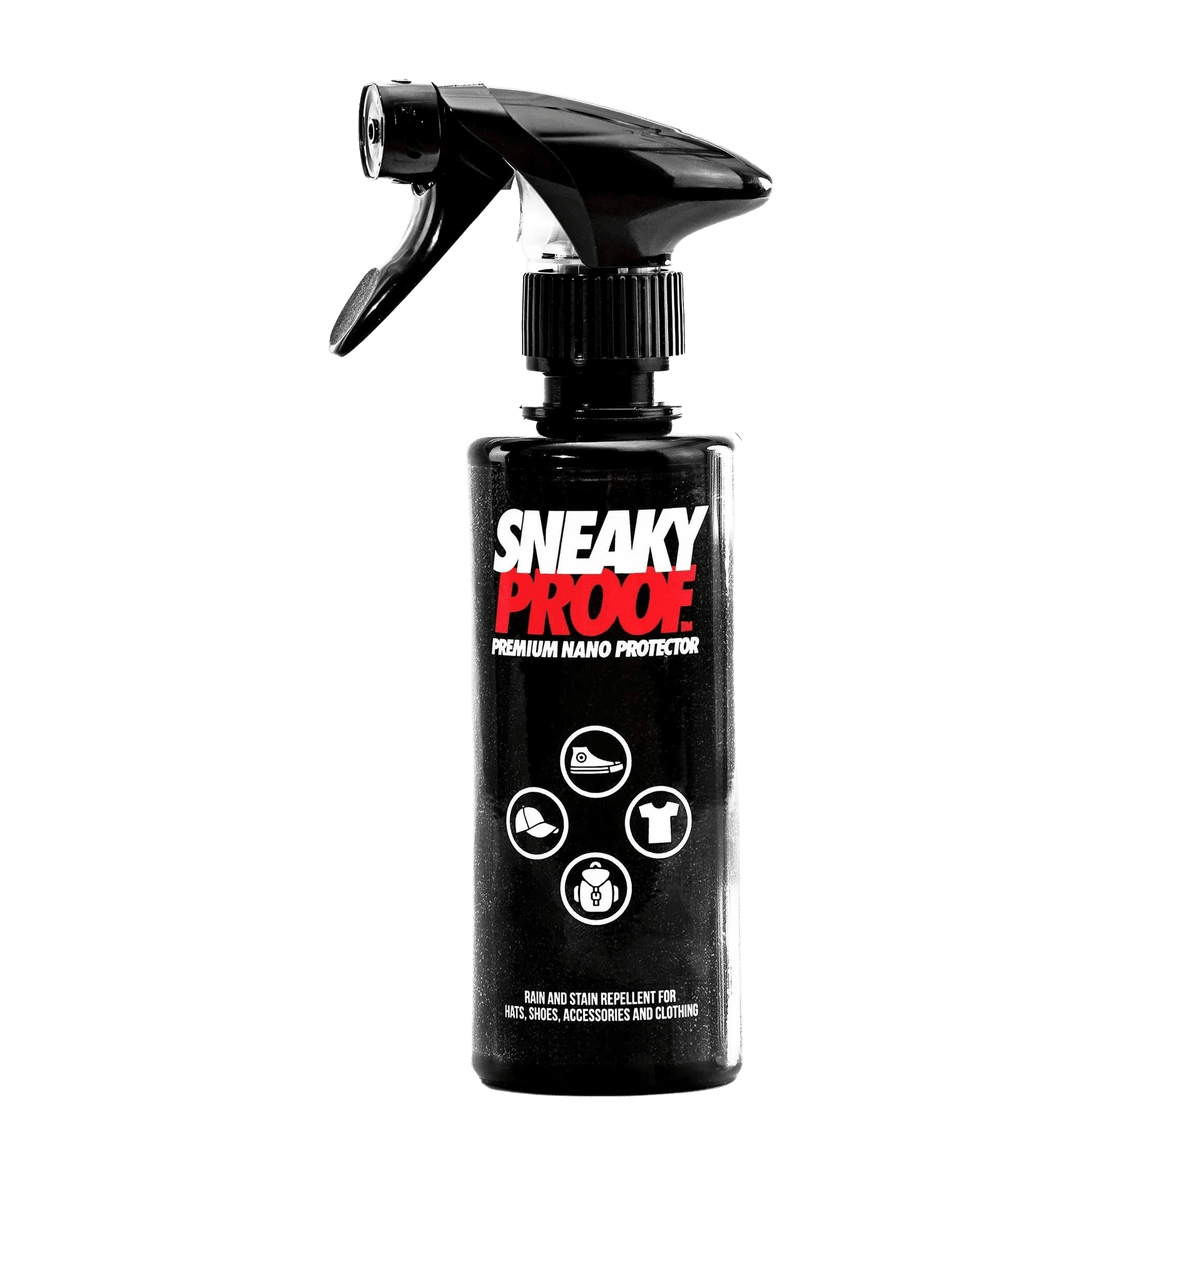 Sneaky Proof - Performance Protector and Waterproof Spray - Kick Game